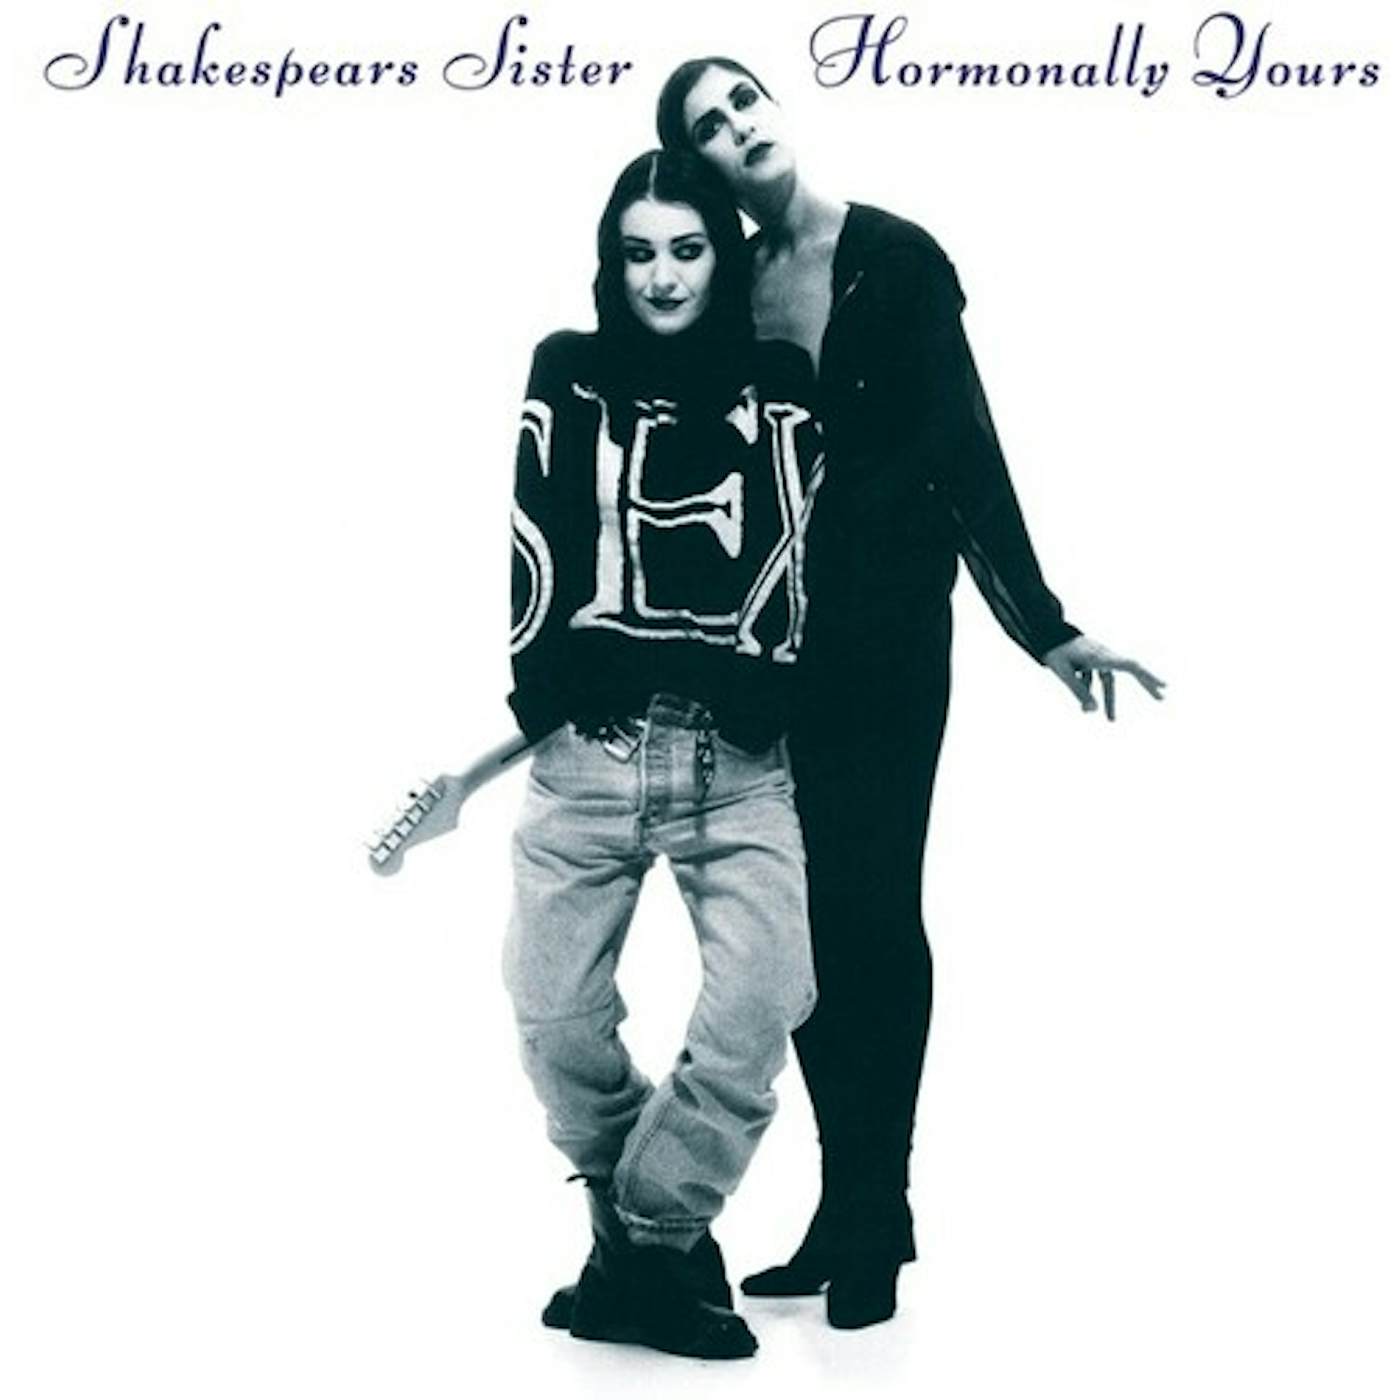 Shakespears Sister Hormonally Yours Vinyl Record